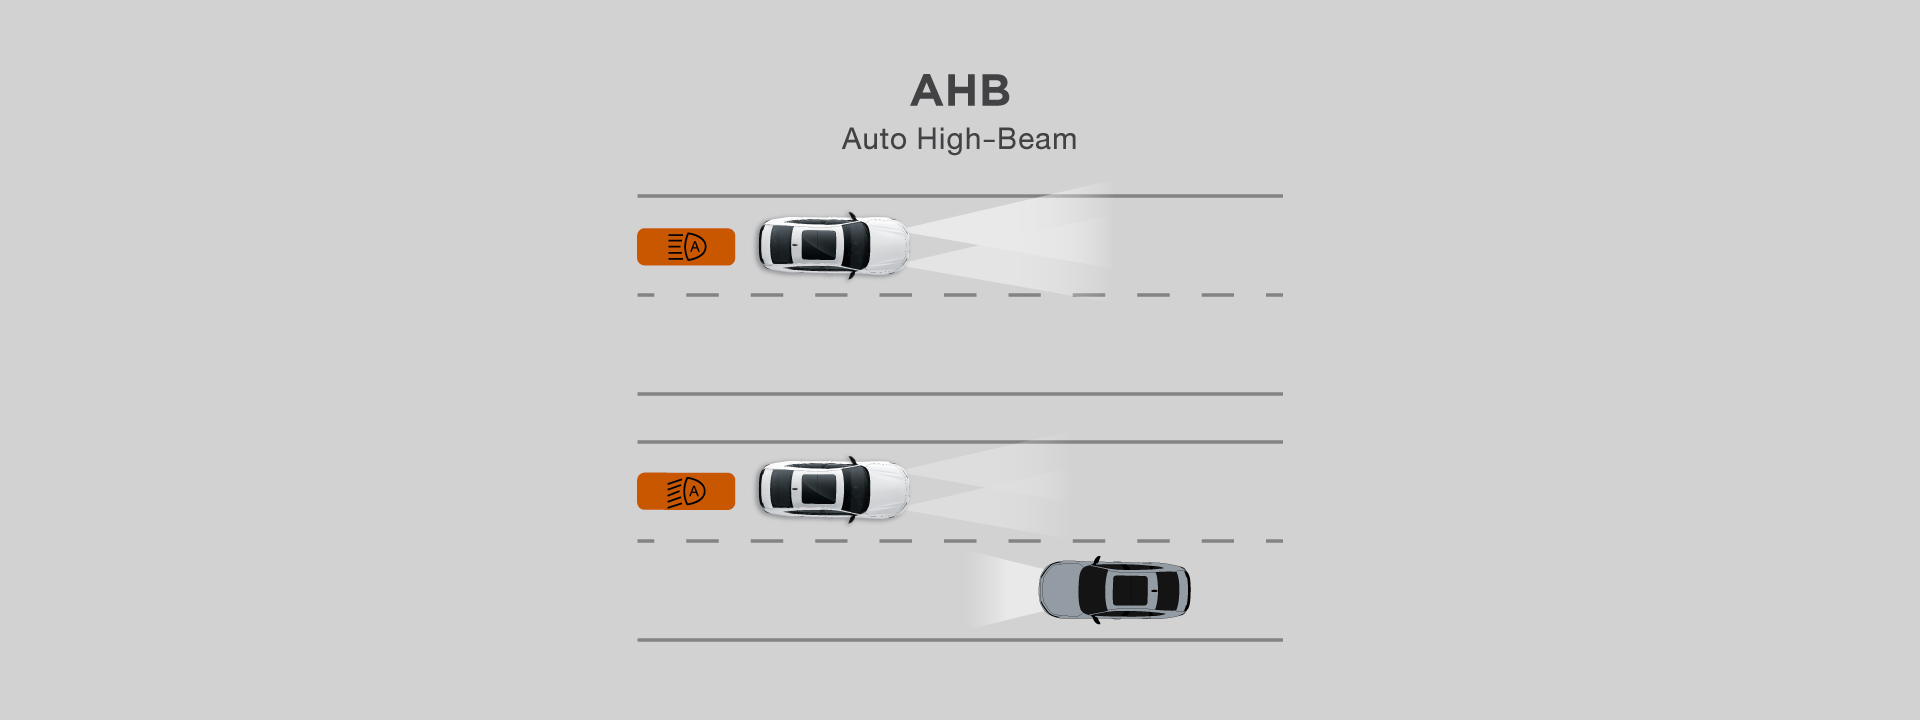 Auto High-Beam (AHB) ระบบปรับไฟสูงอัตโนมัติ